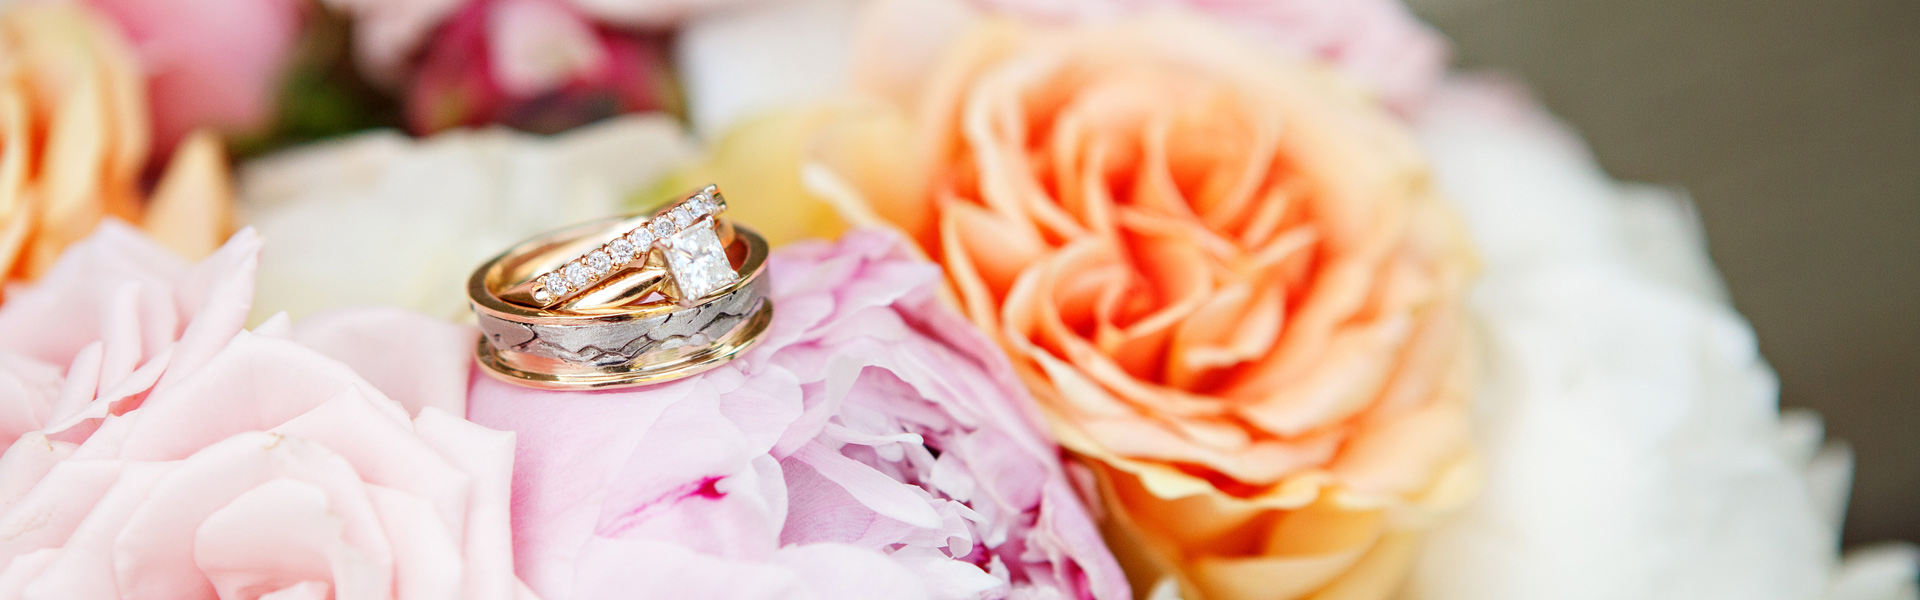 Wedding rings in a bouquet